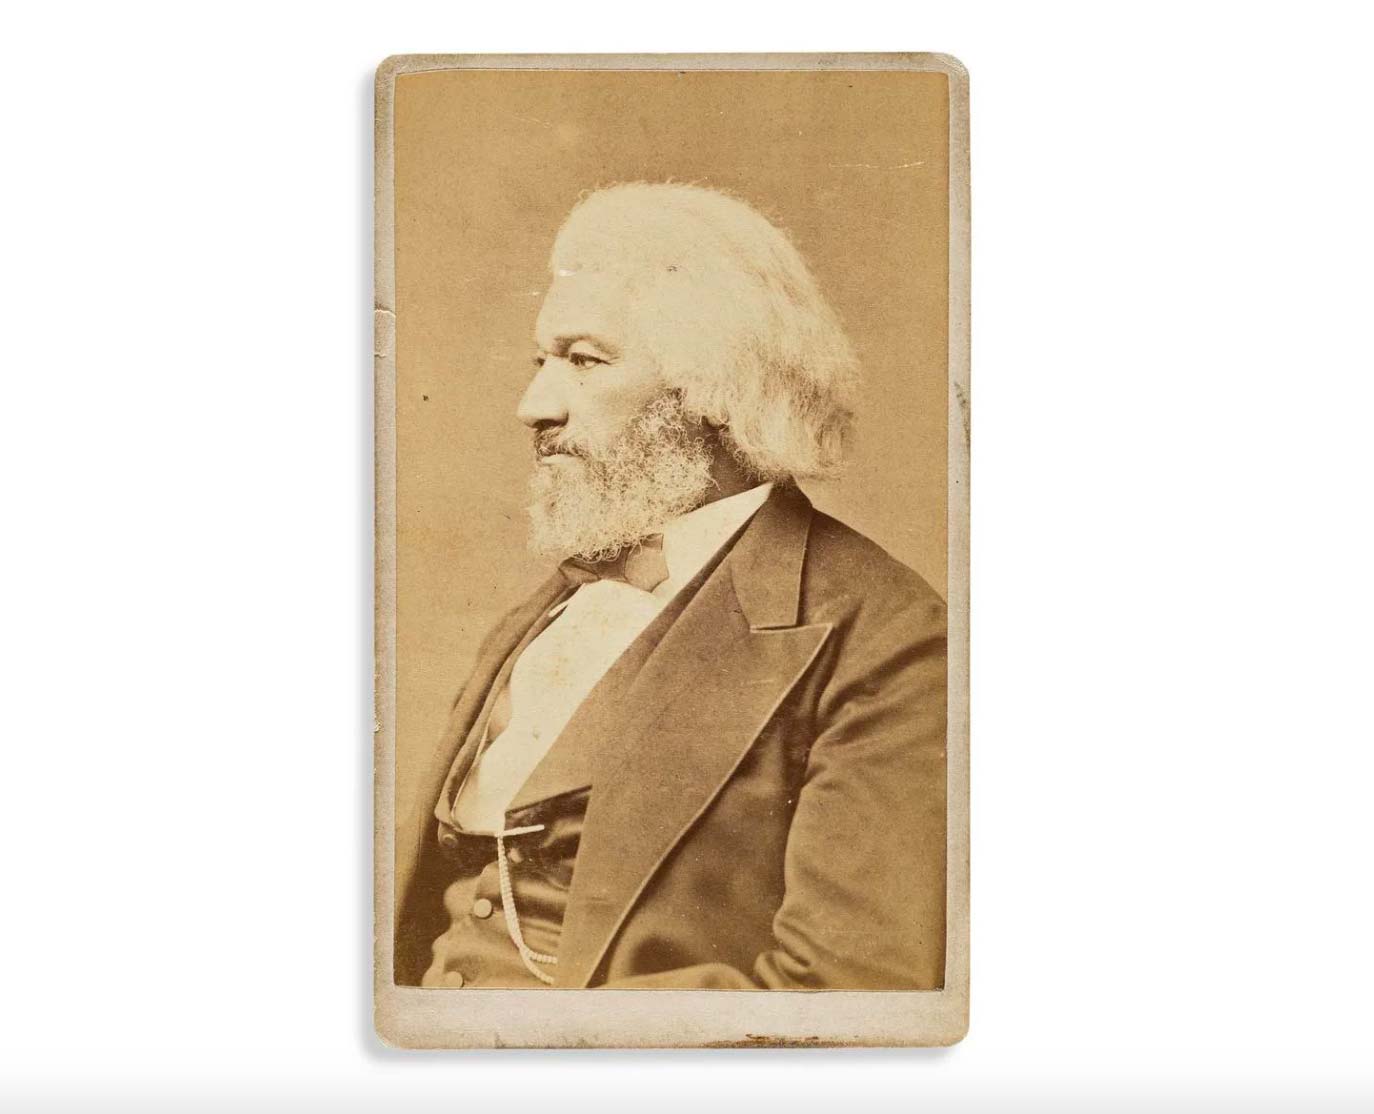 Frederick Douglass, photograph by Samuel M. Fassett, 1878. $15,000-$25,000. Image courtesy Swann's Auction Galleries